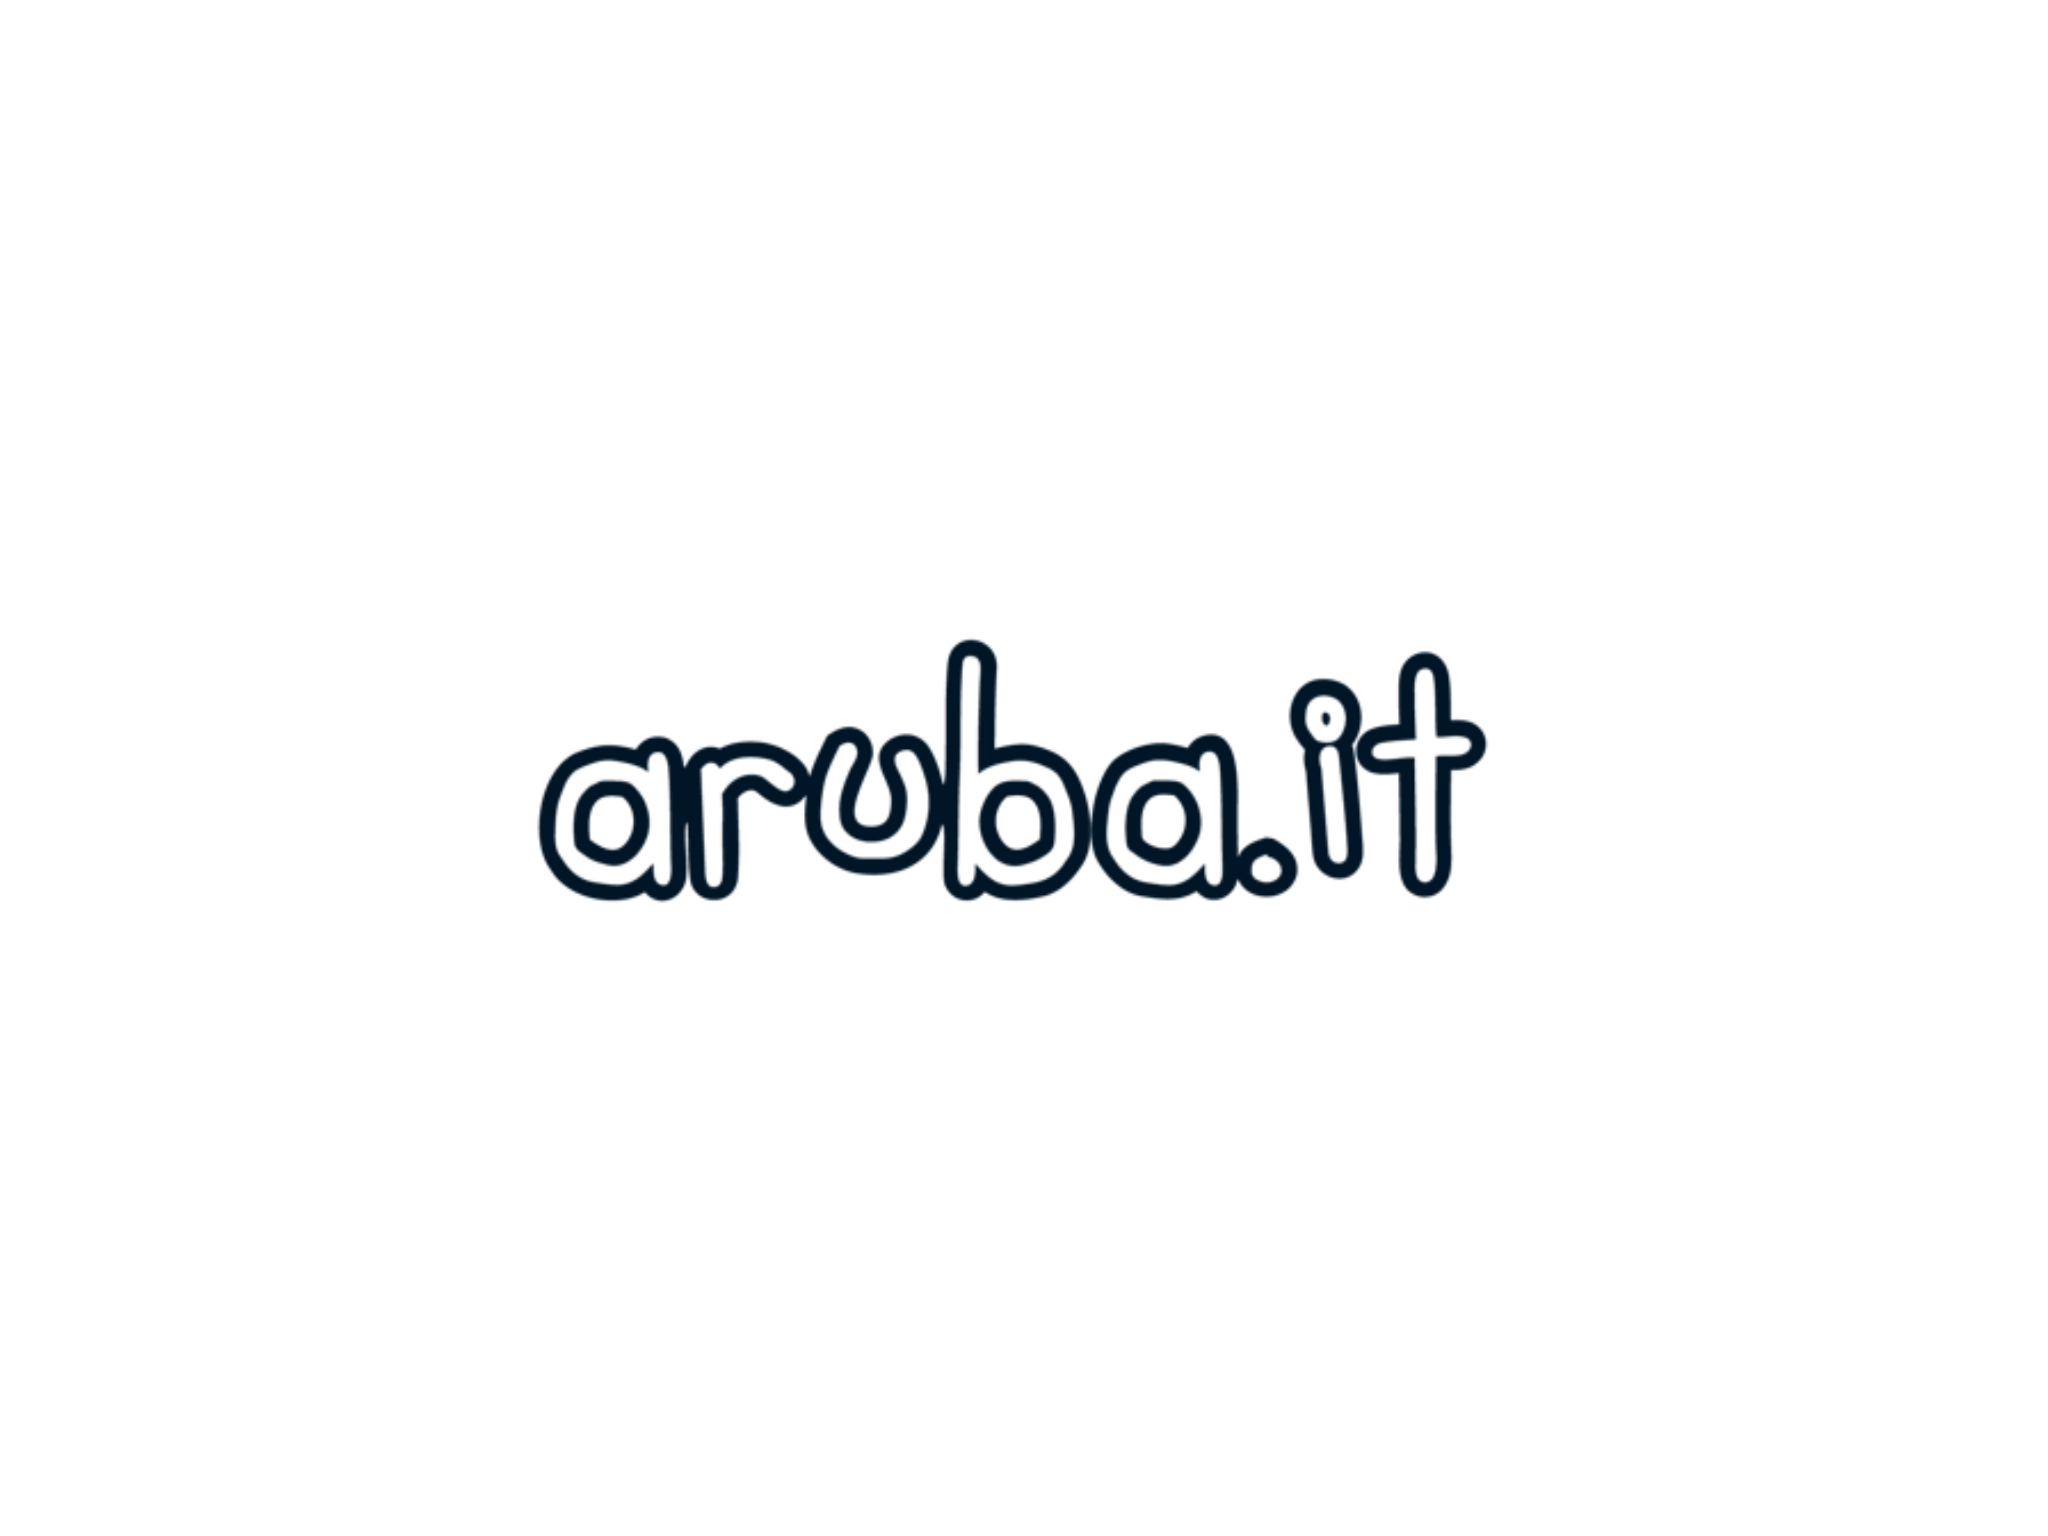 Dark Aruba logo on transparent background